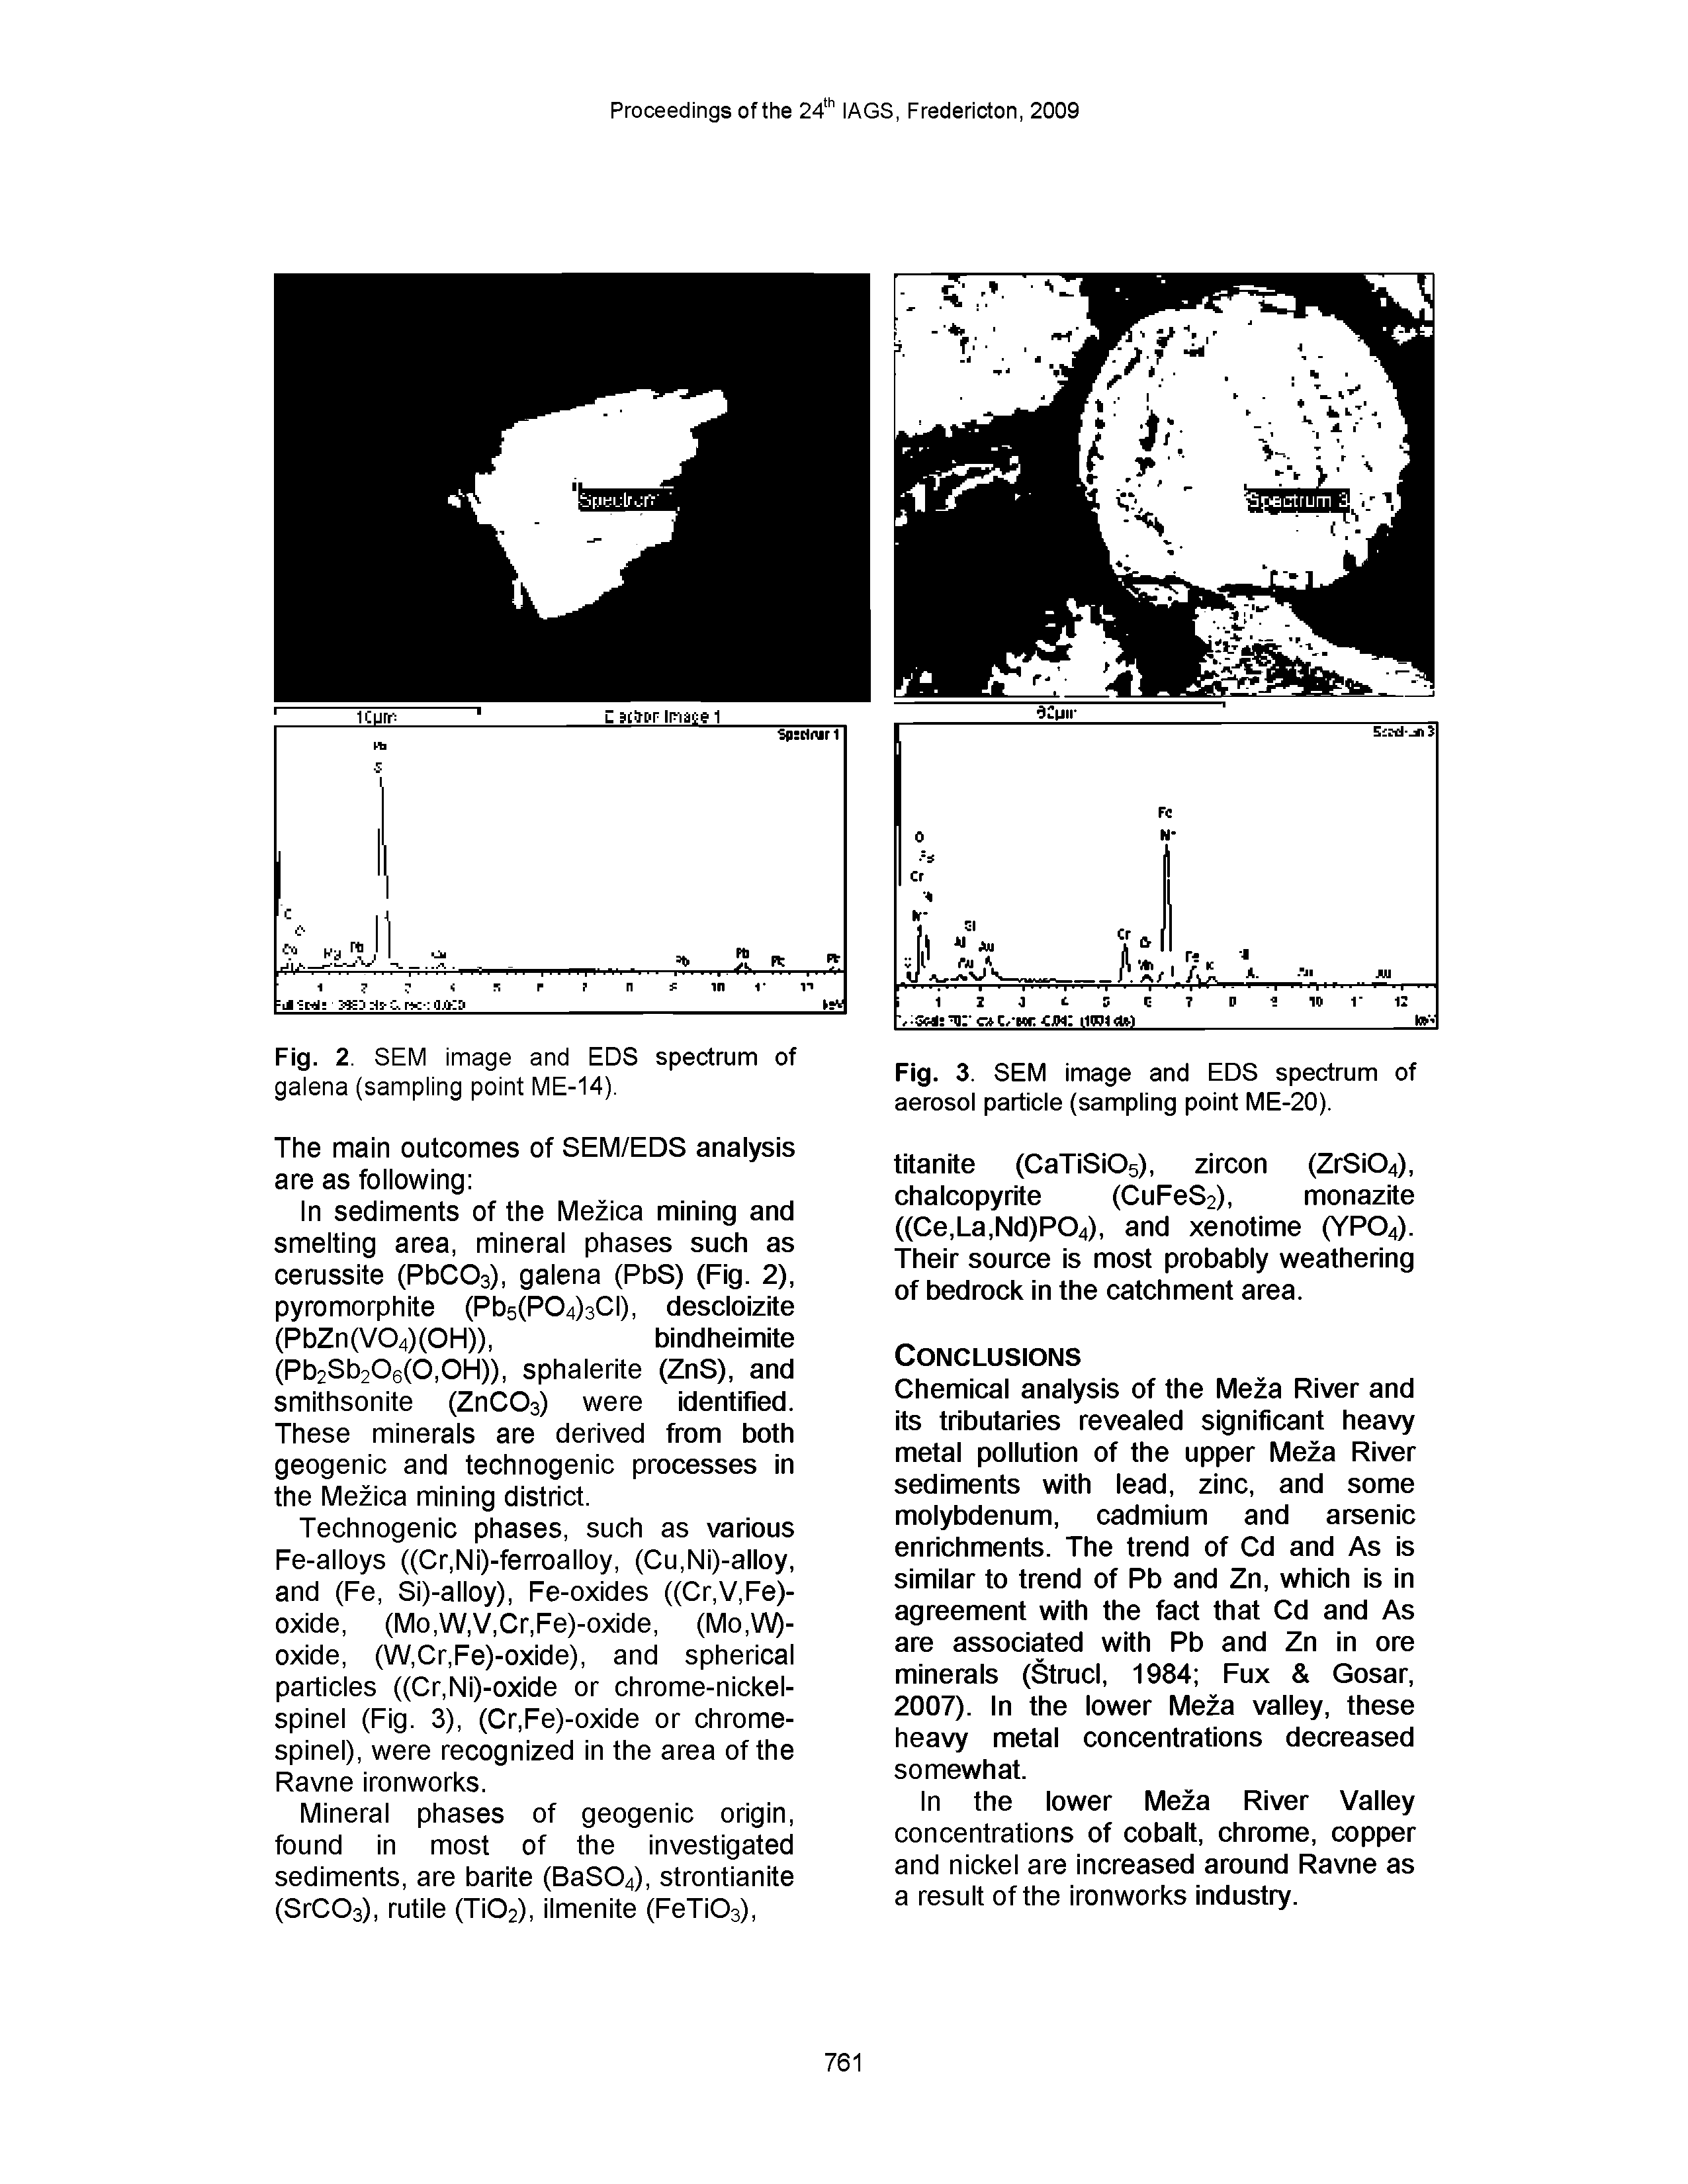 Fig. 3. SEM image and EDS spectrum of aerosol particle (sampling point ME-20).